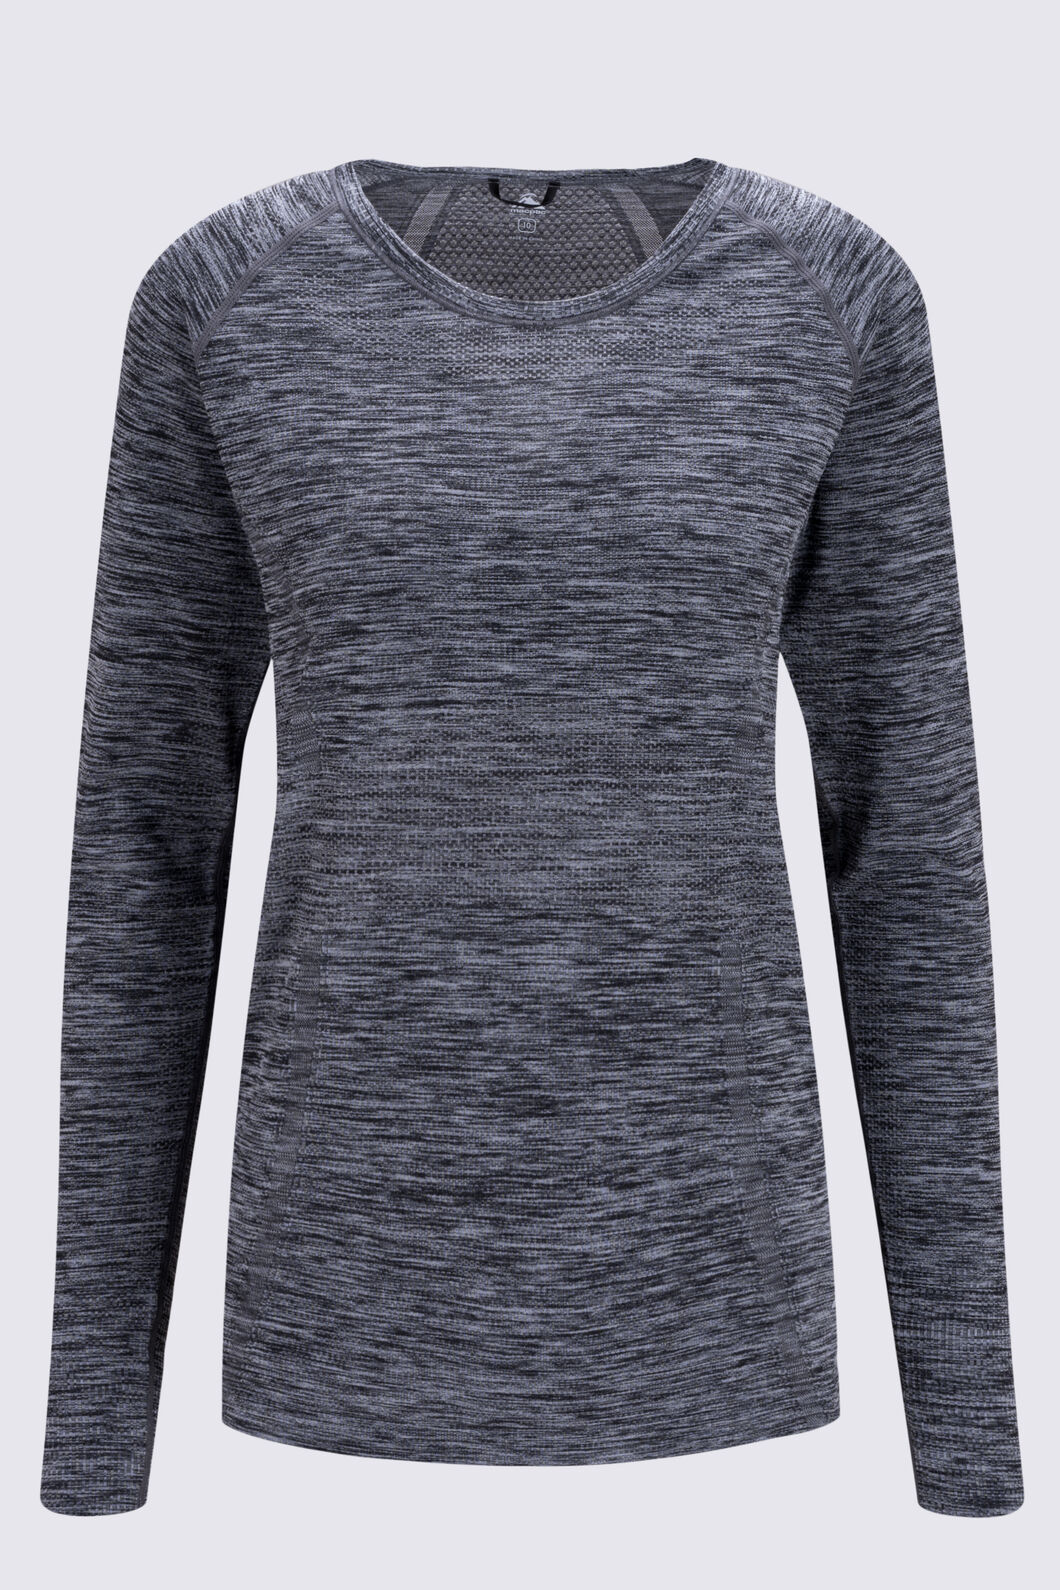 Macpac Women's Limitless Long Sleeve T-Shirt | Macpac